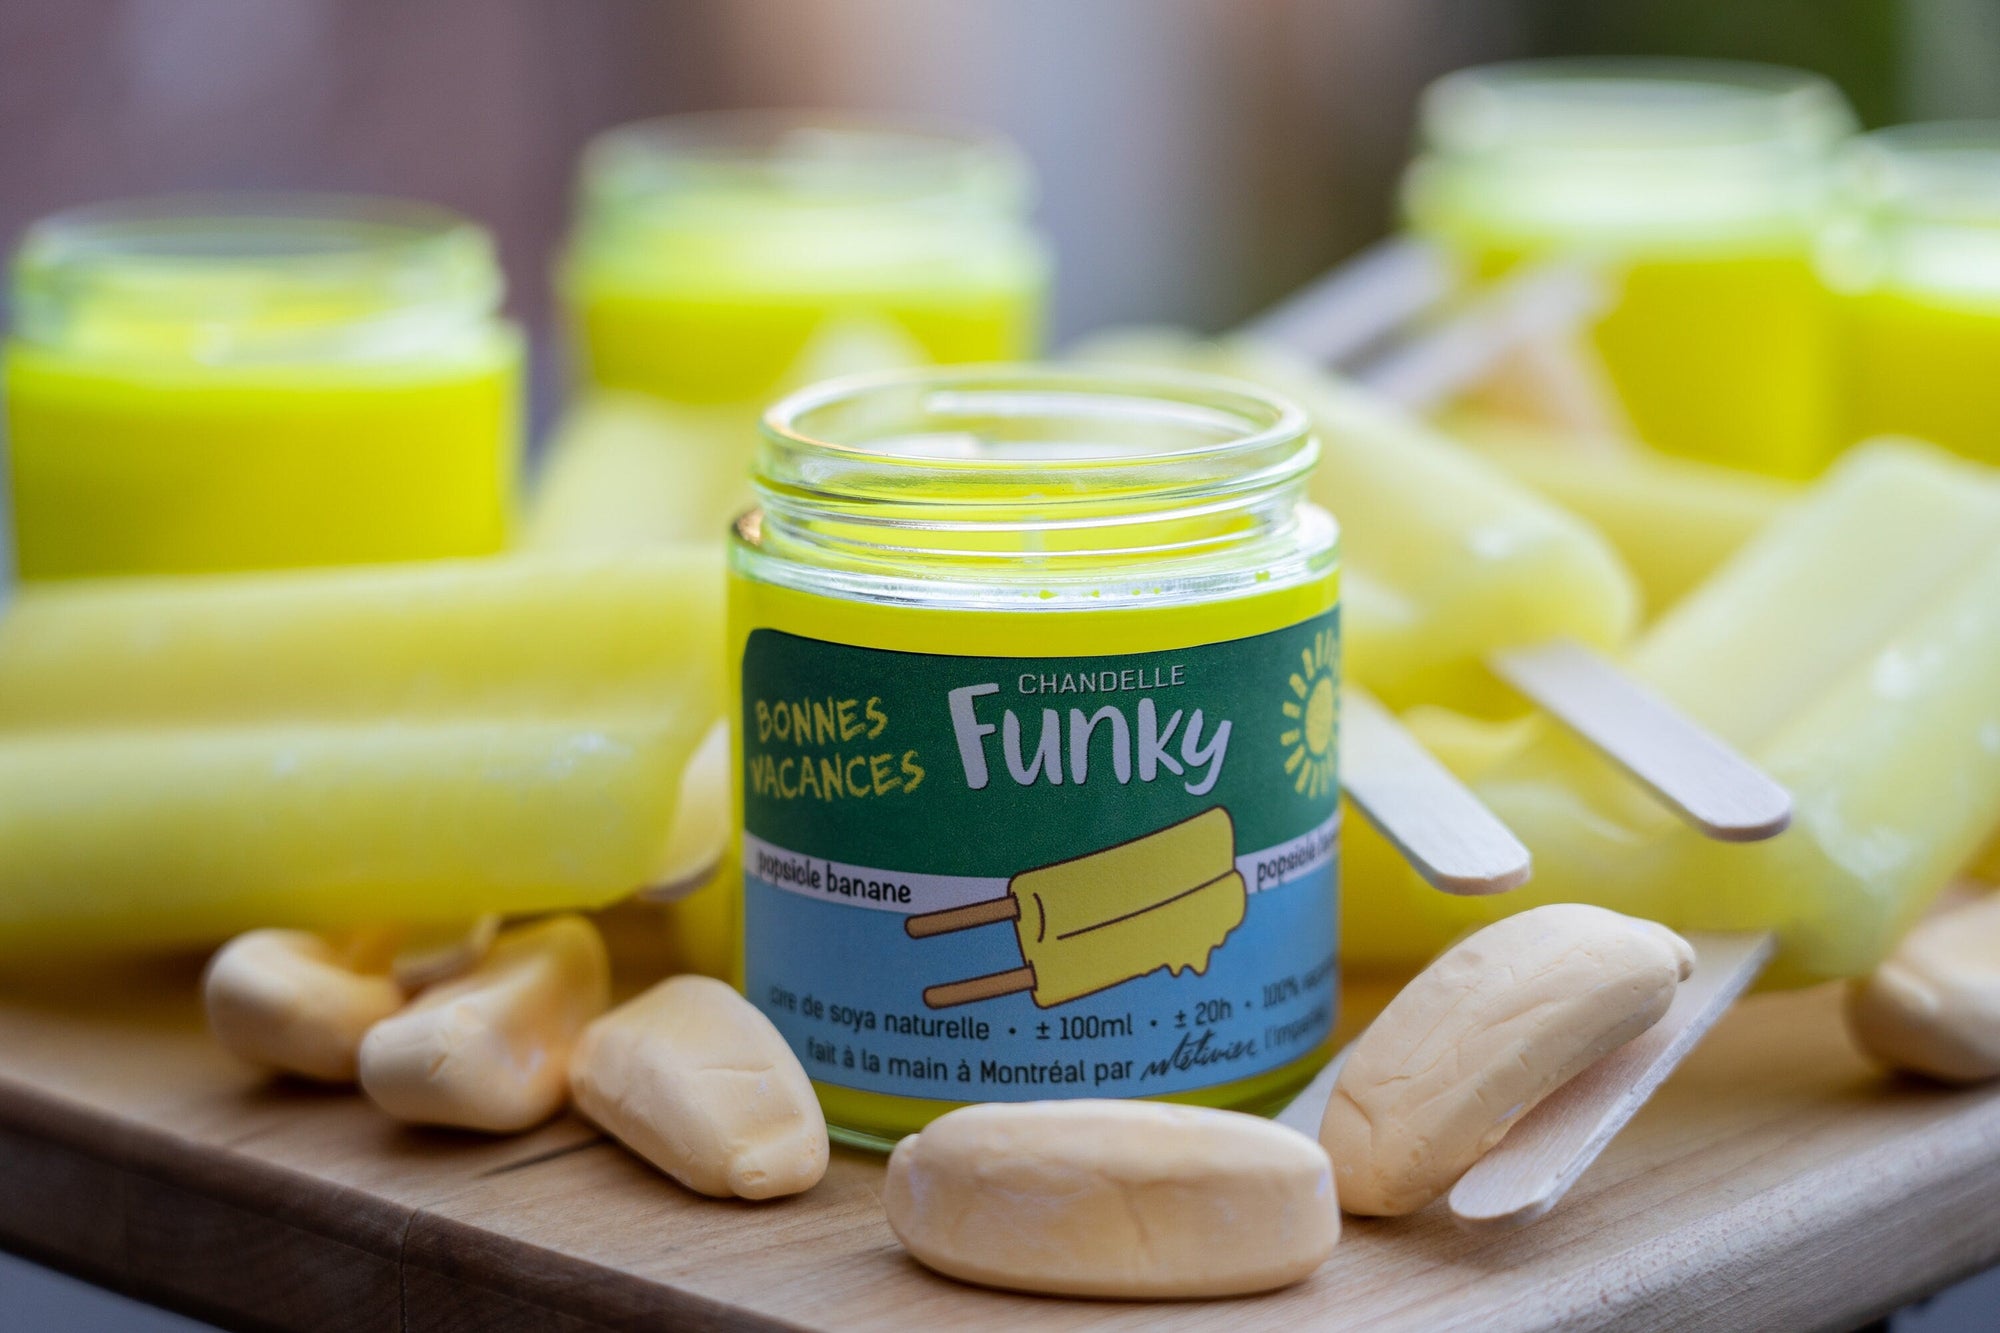 Chandelle Popsicle banane - Funky - Funky & Co.